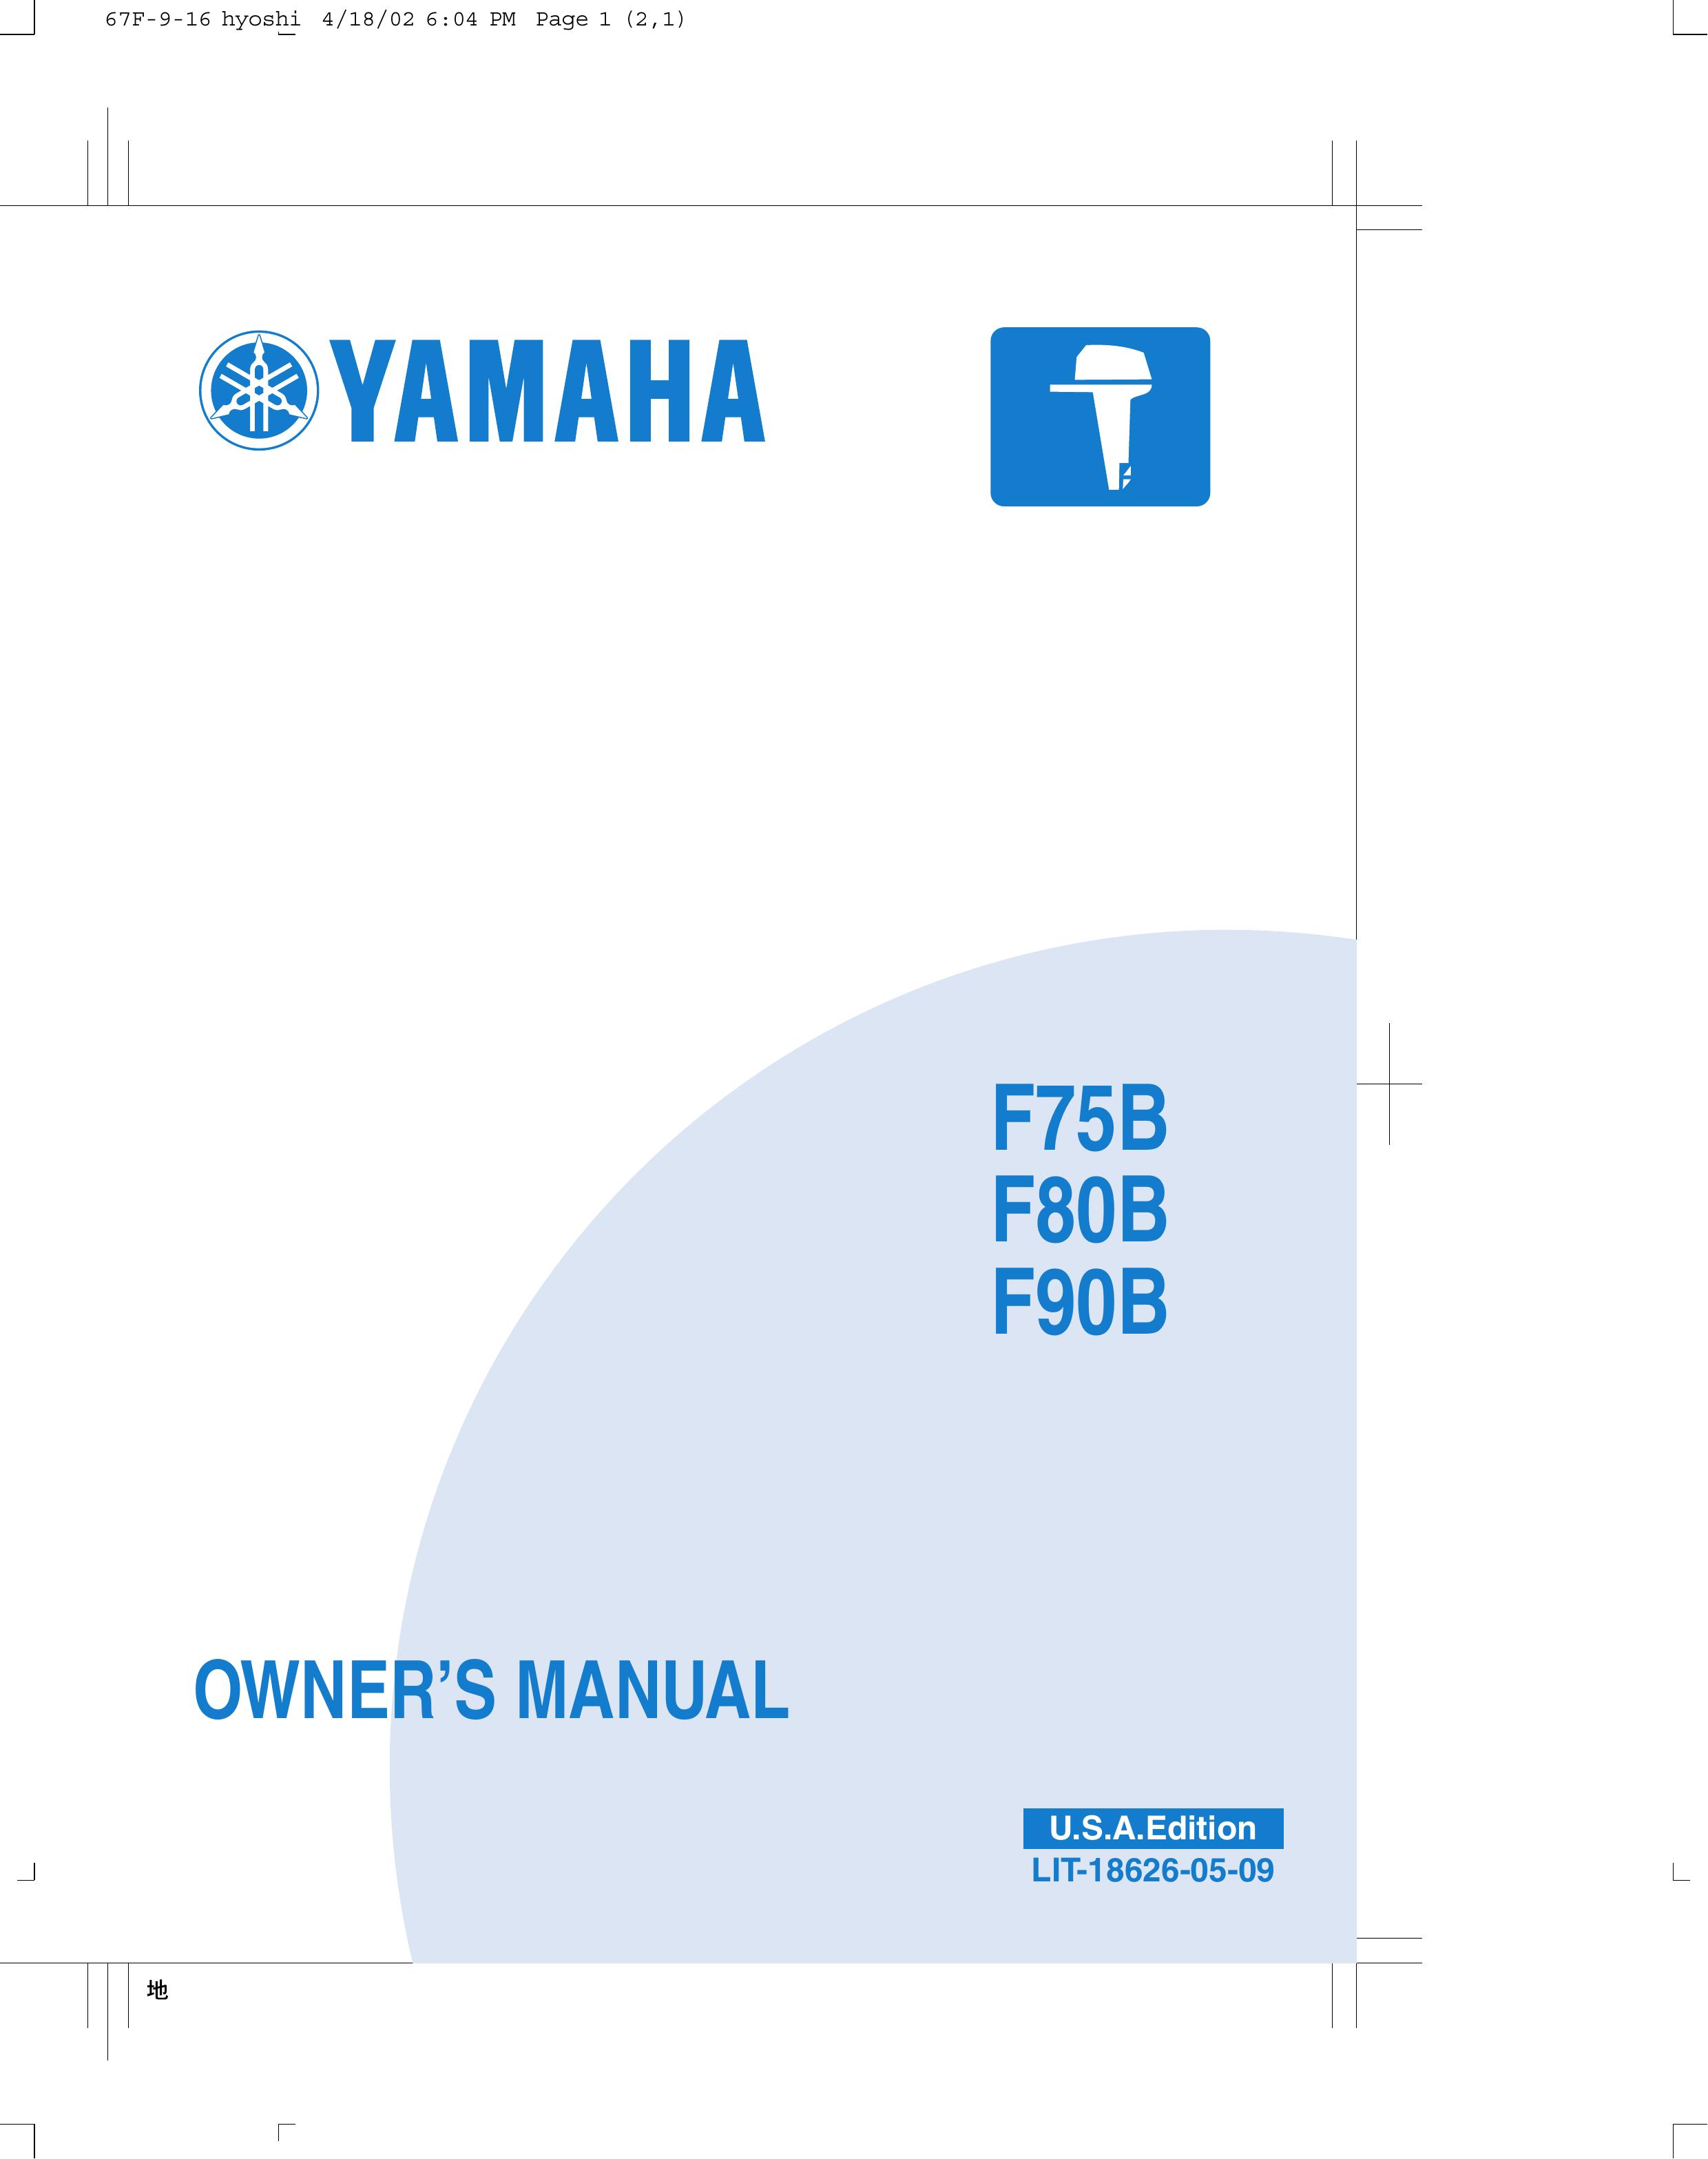 Yamaha F75B Outboard Motor User Manual